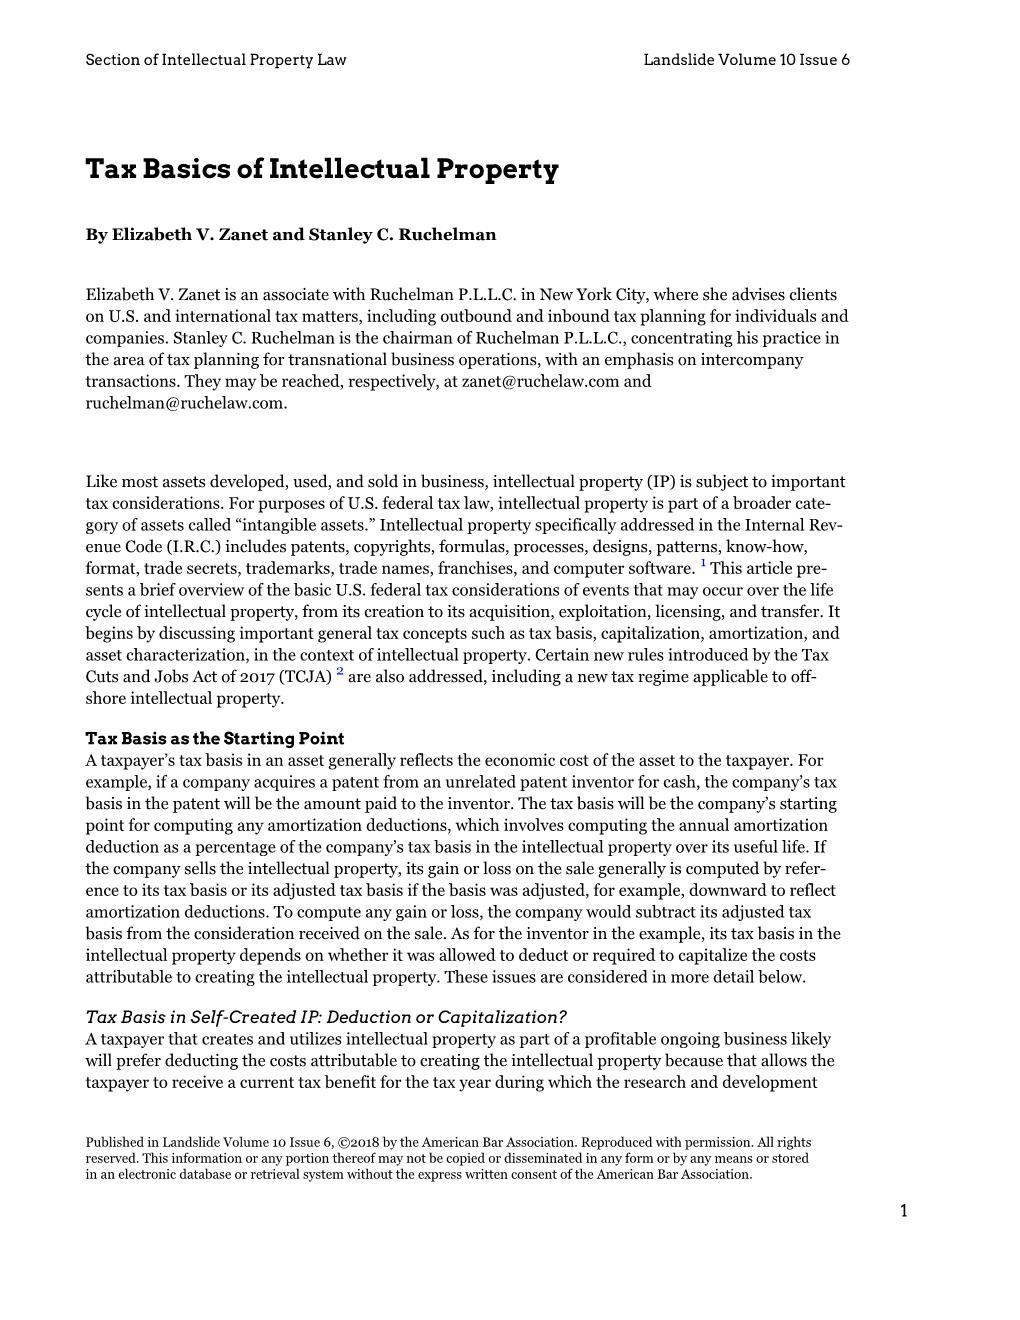 Tax Basics of Intellectual Property